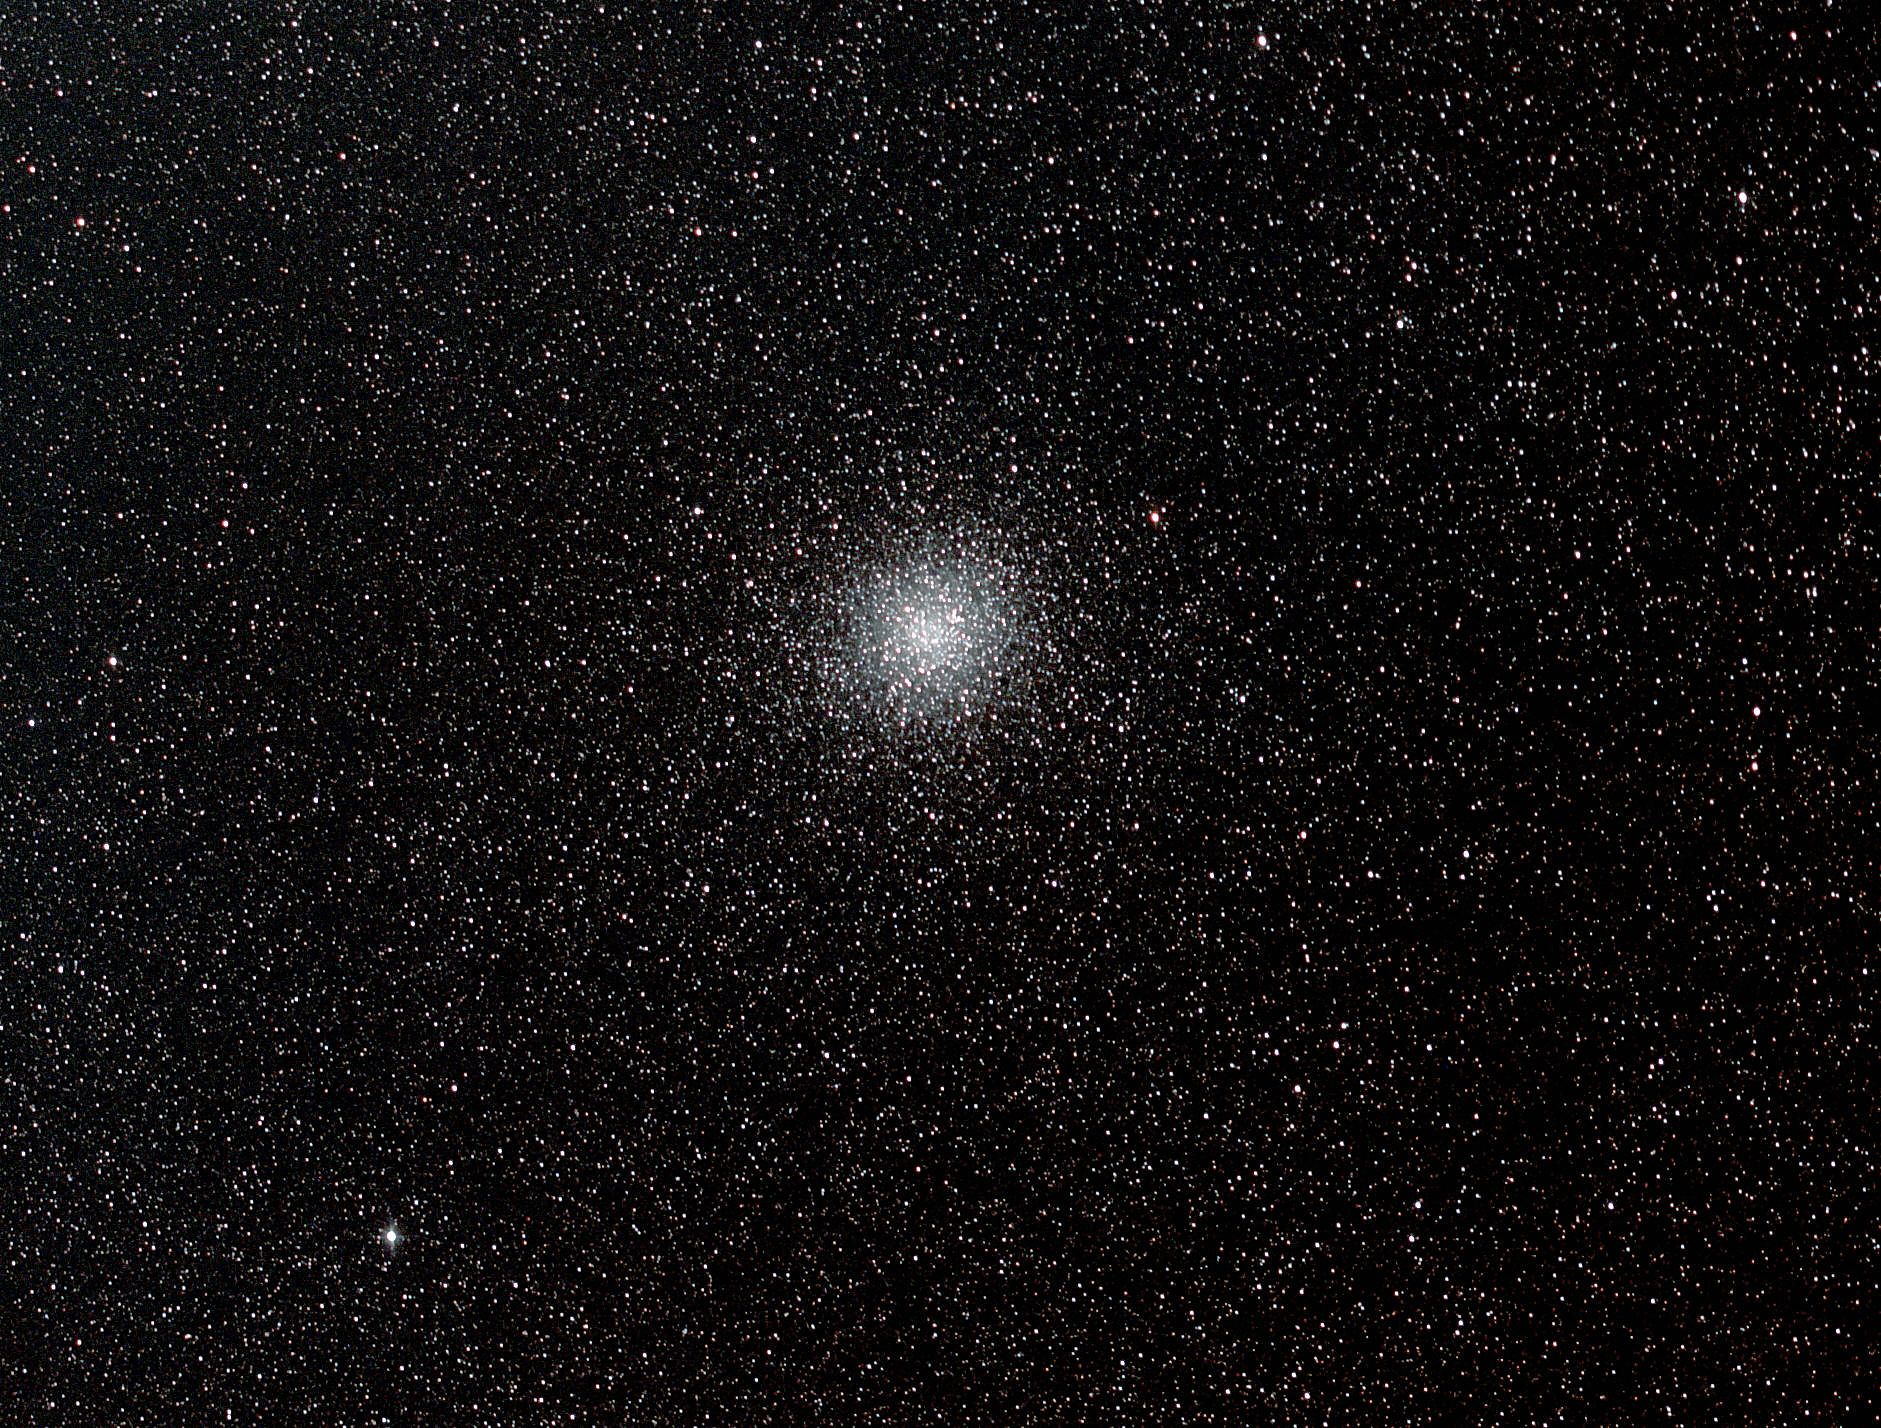 M22 - Globular Cluster